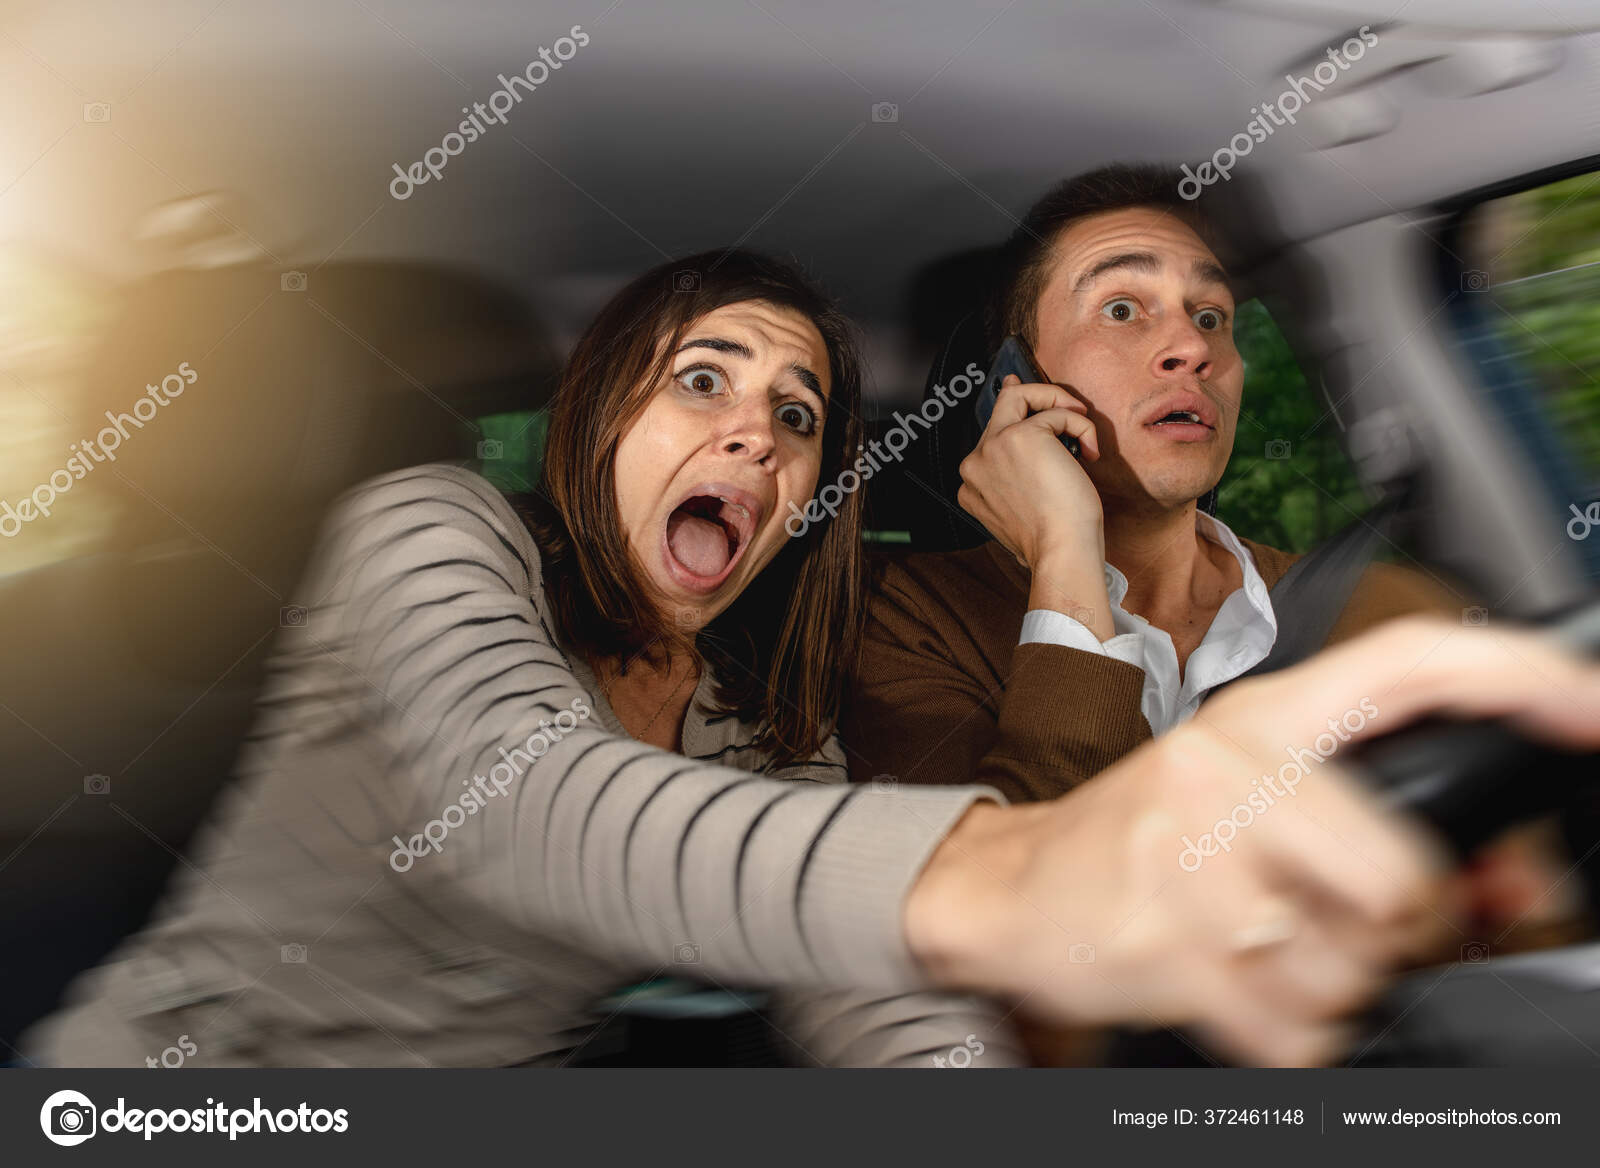 https://st3.depositphotos.com/35990688/37246/i/1600/depositphotos_372461148-stock-photo-scared-couple-car-driver-talking.jpg